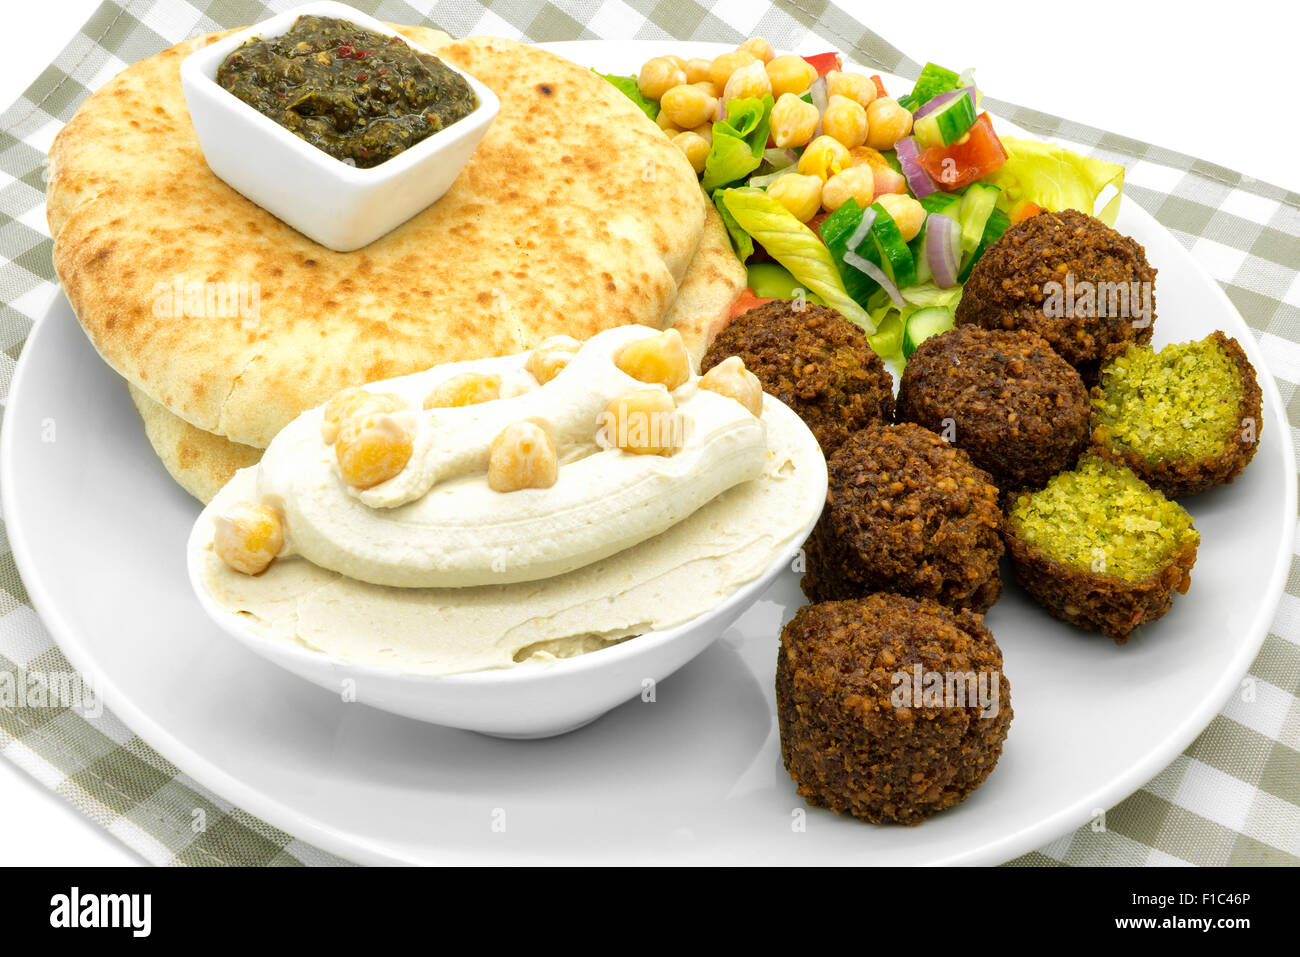 Middle Eastern food - falafel, hummus, pita Stock Photo